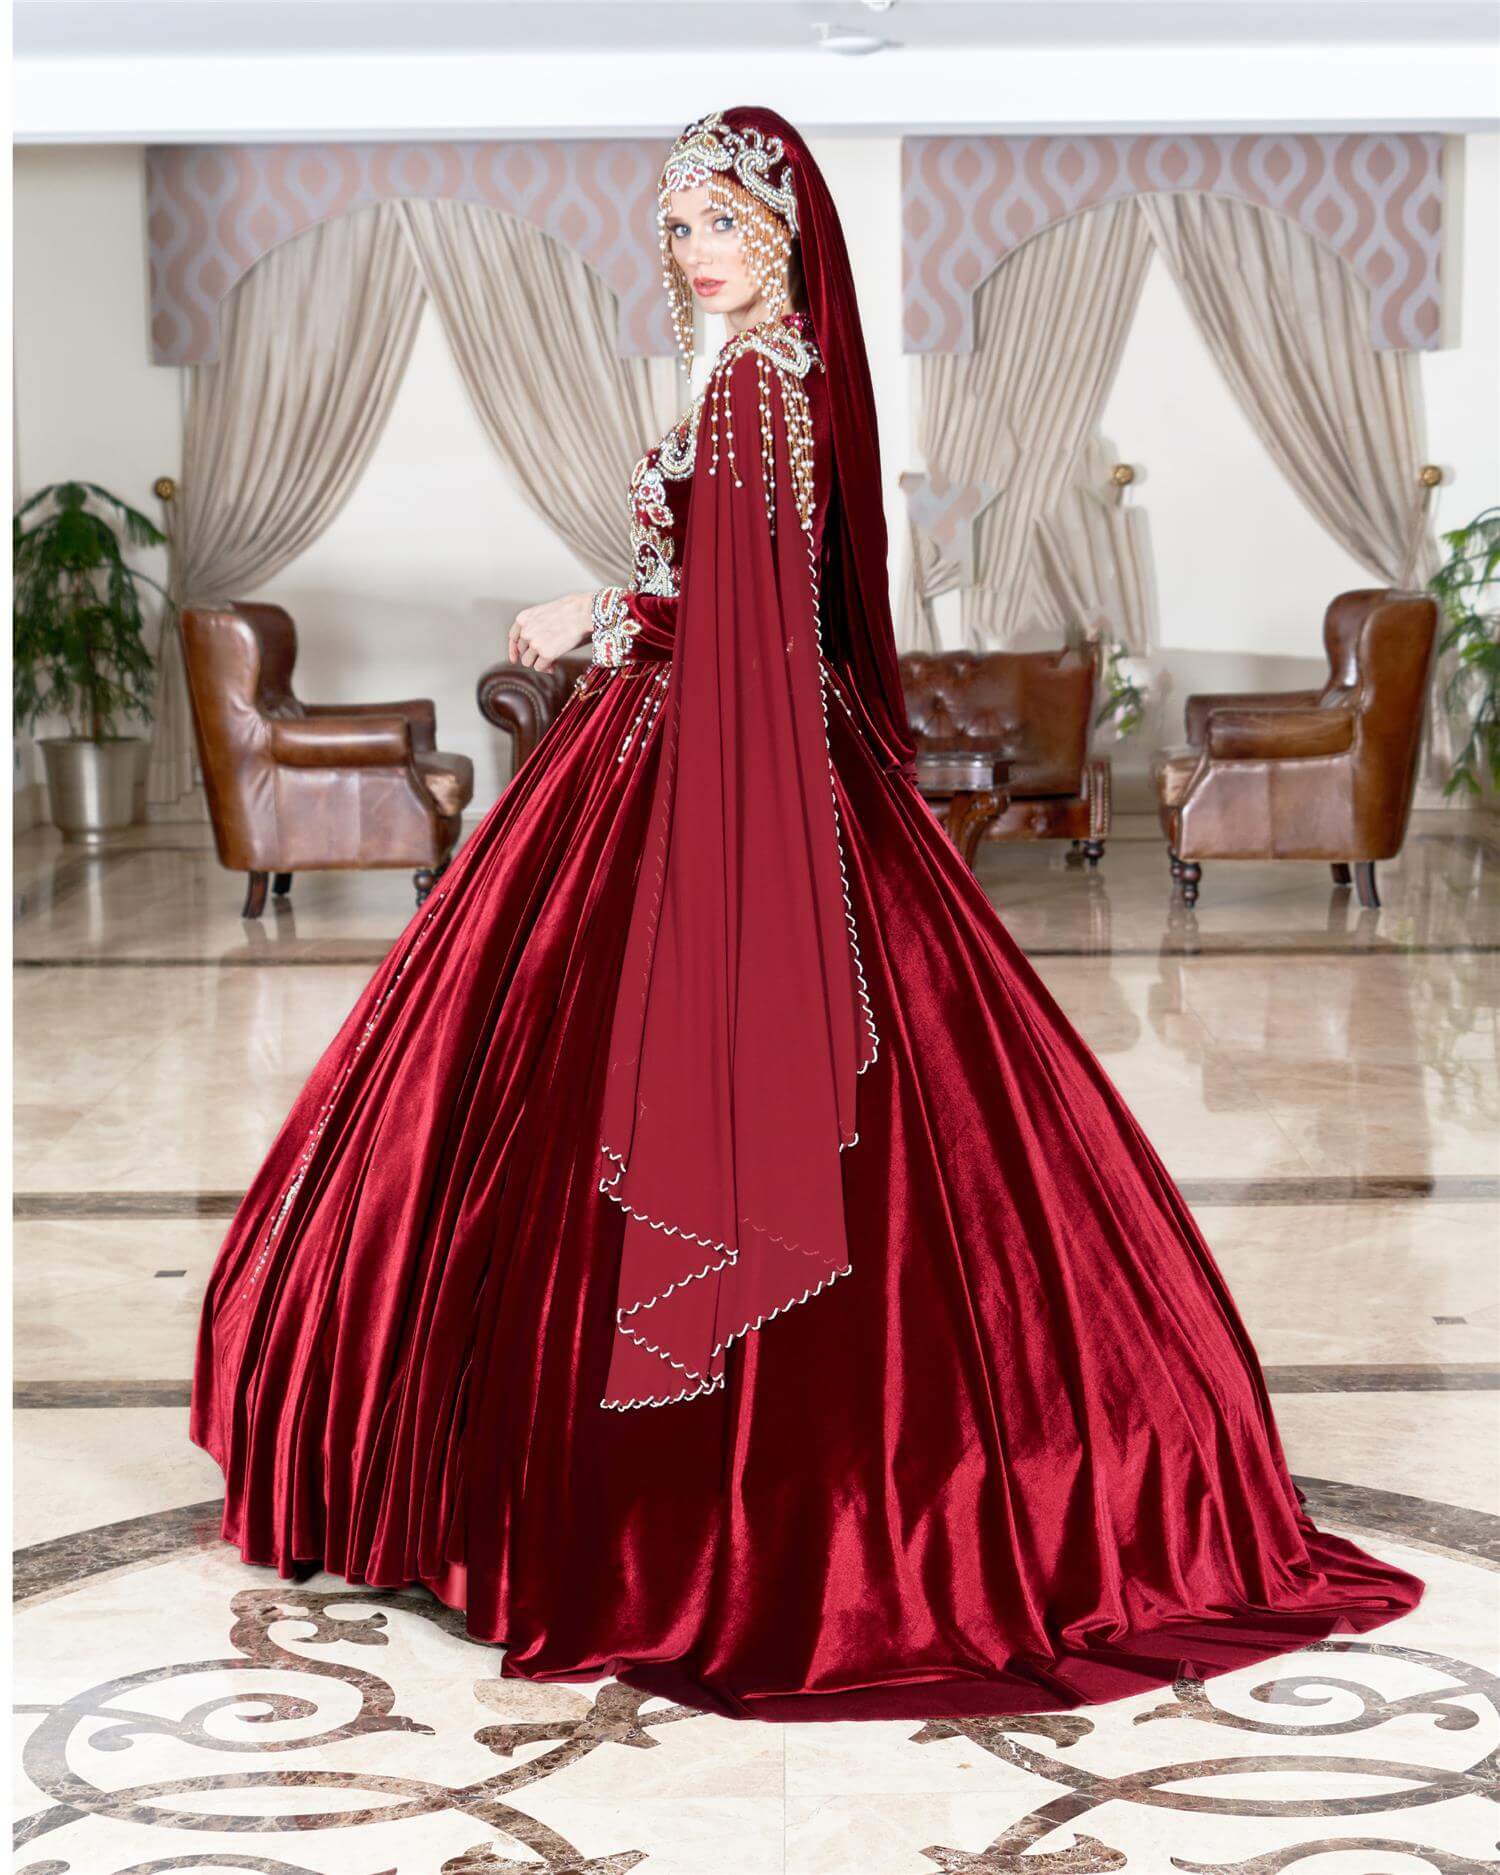 Claret Red Hijab Henna Dress